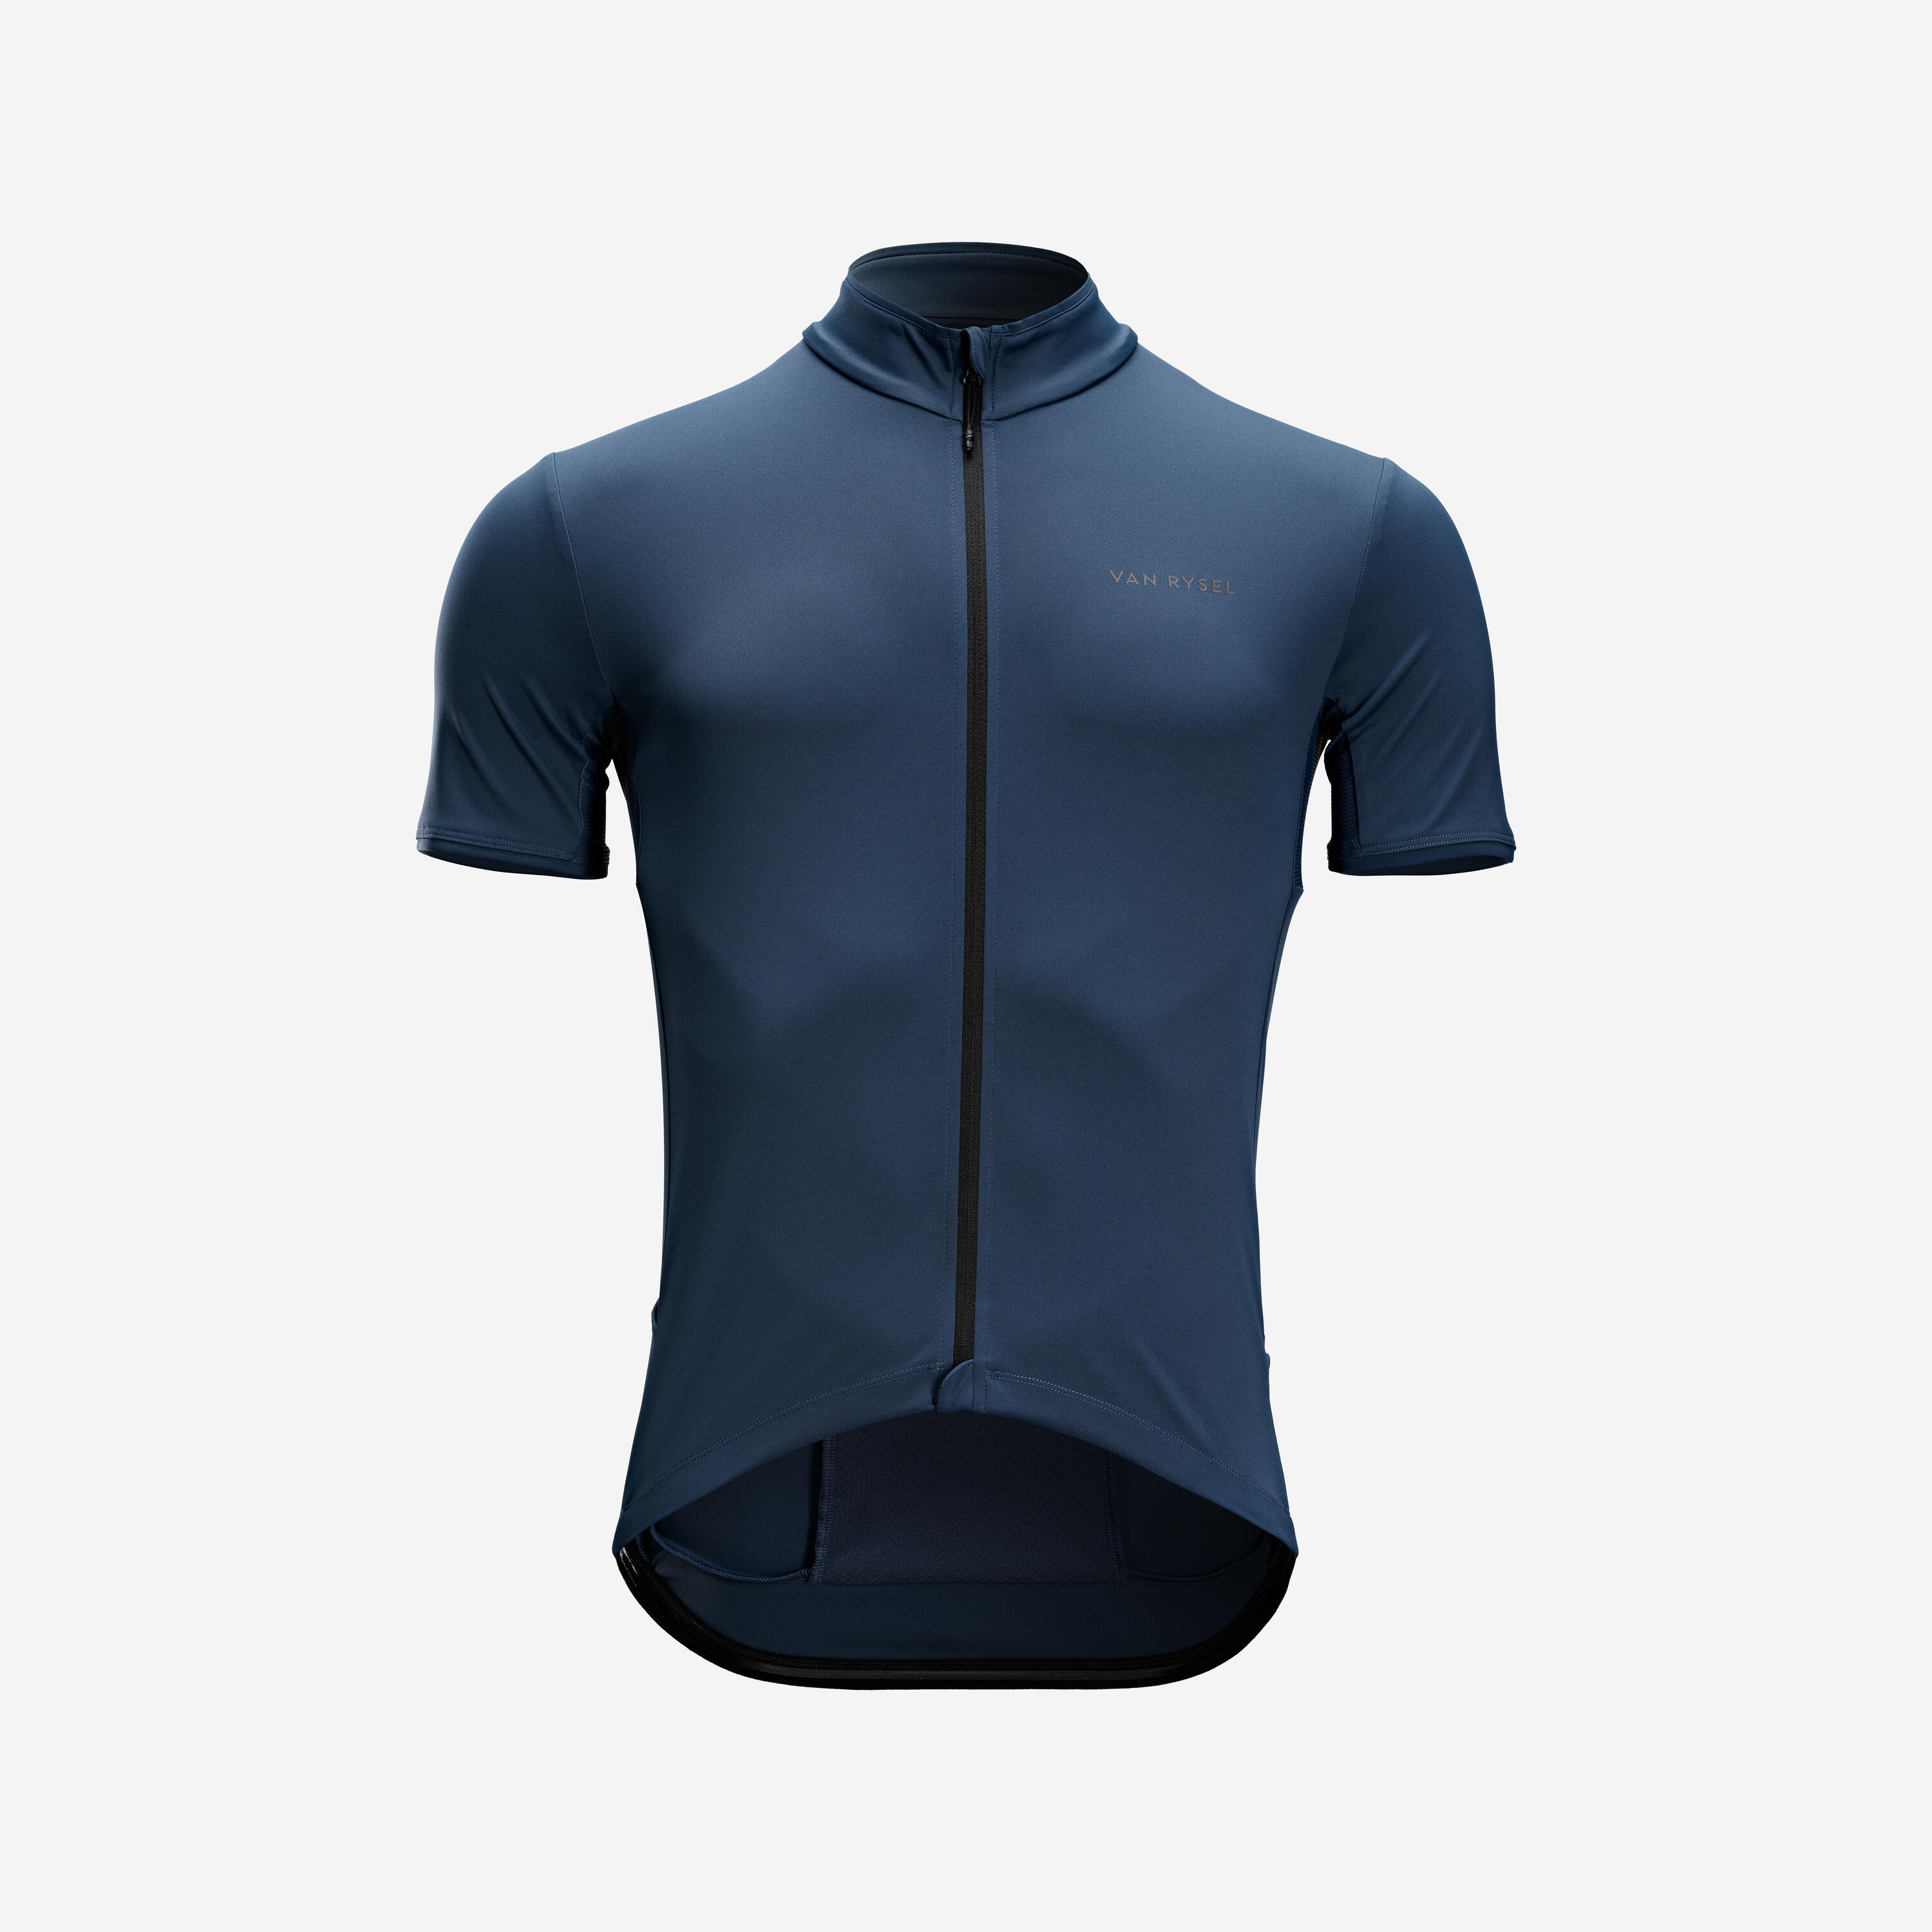 Men's Road Cycling Short-Sleeved Summer Jersey Endurance - Slate Blue 1/6